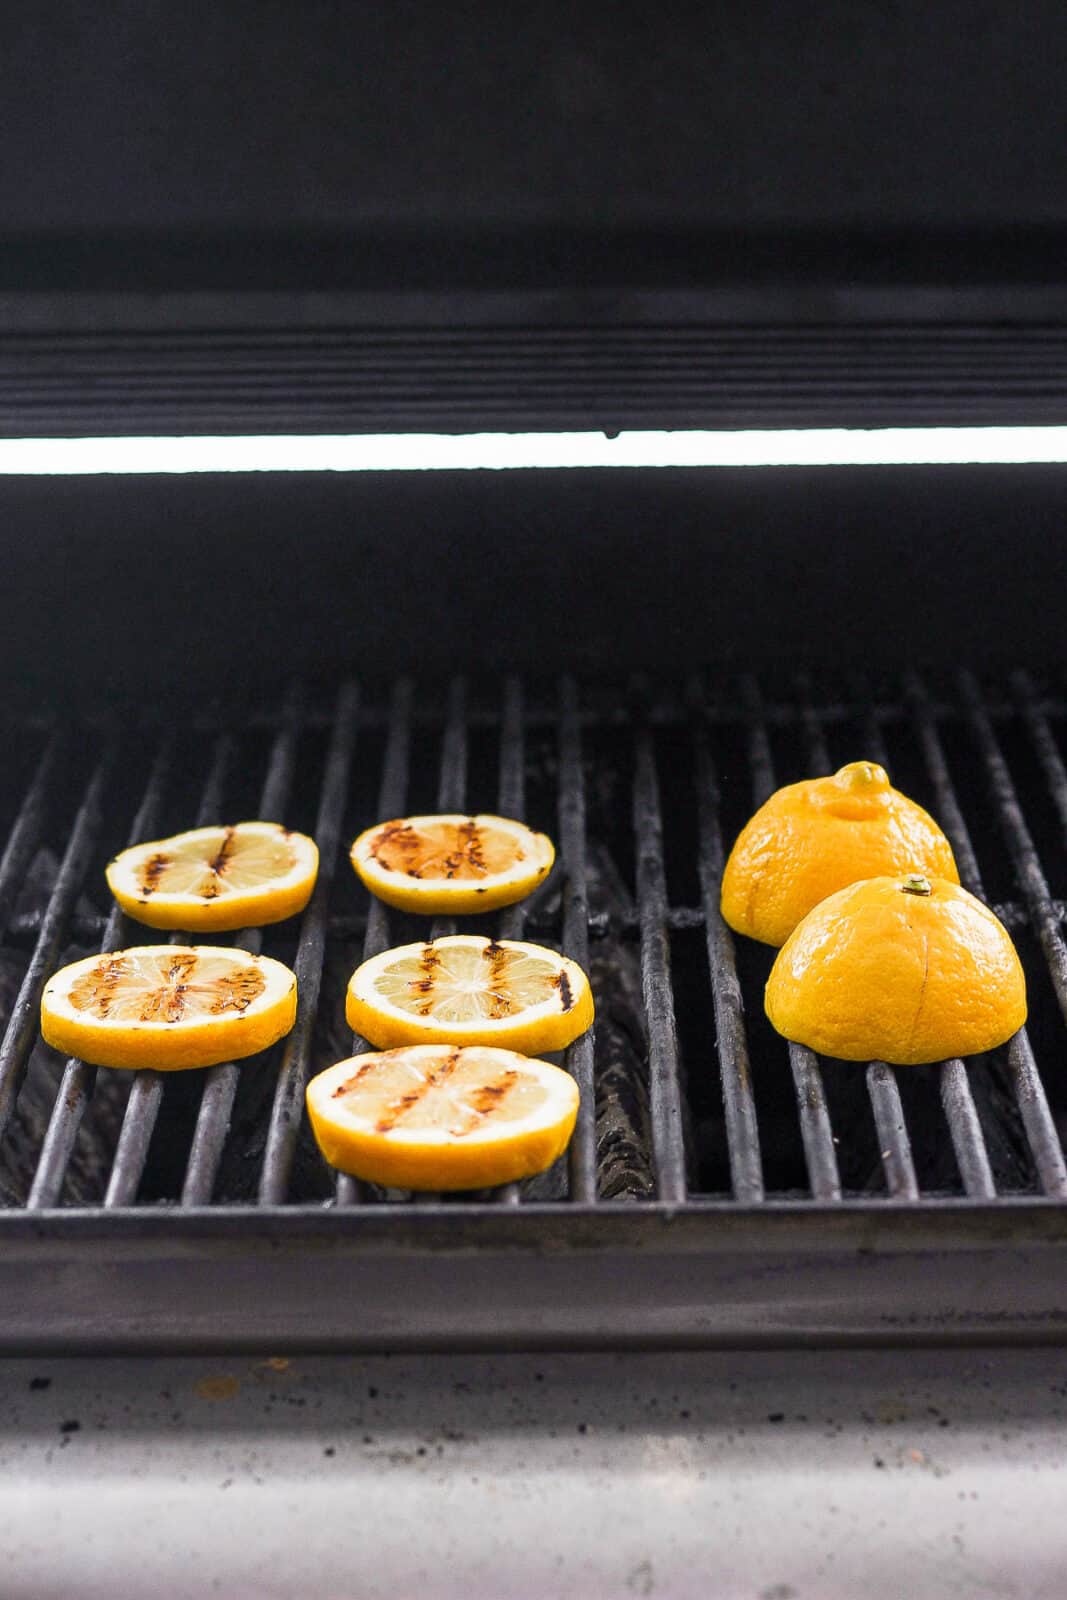 Lemon slices and lemon halves on a grill.